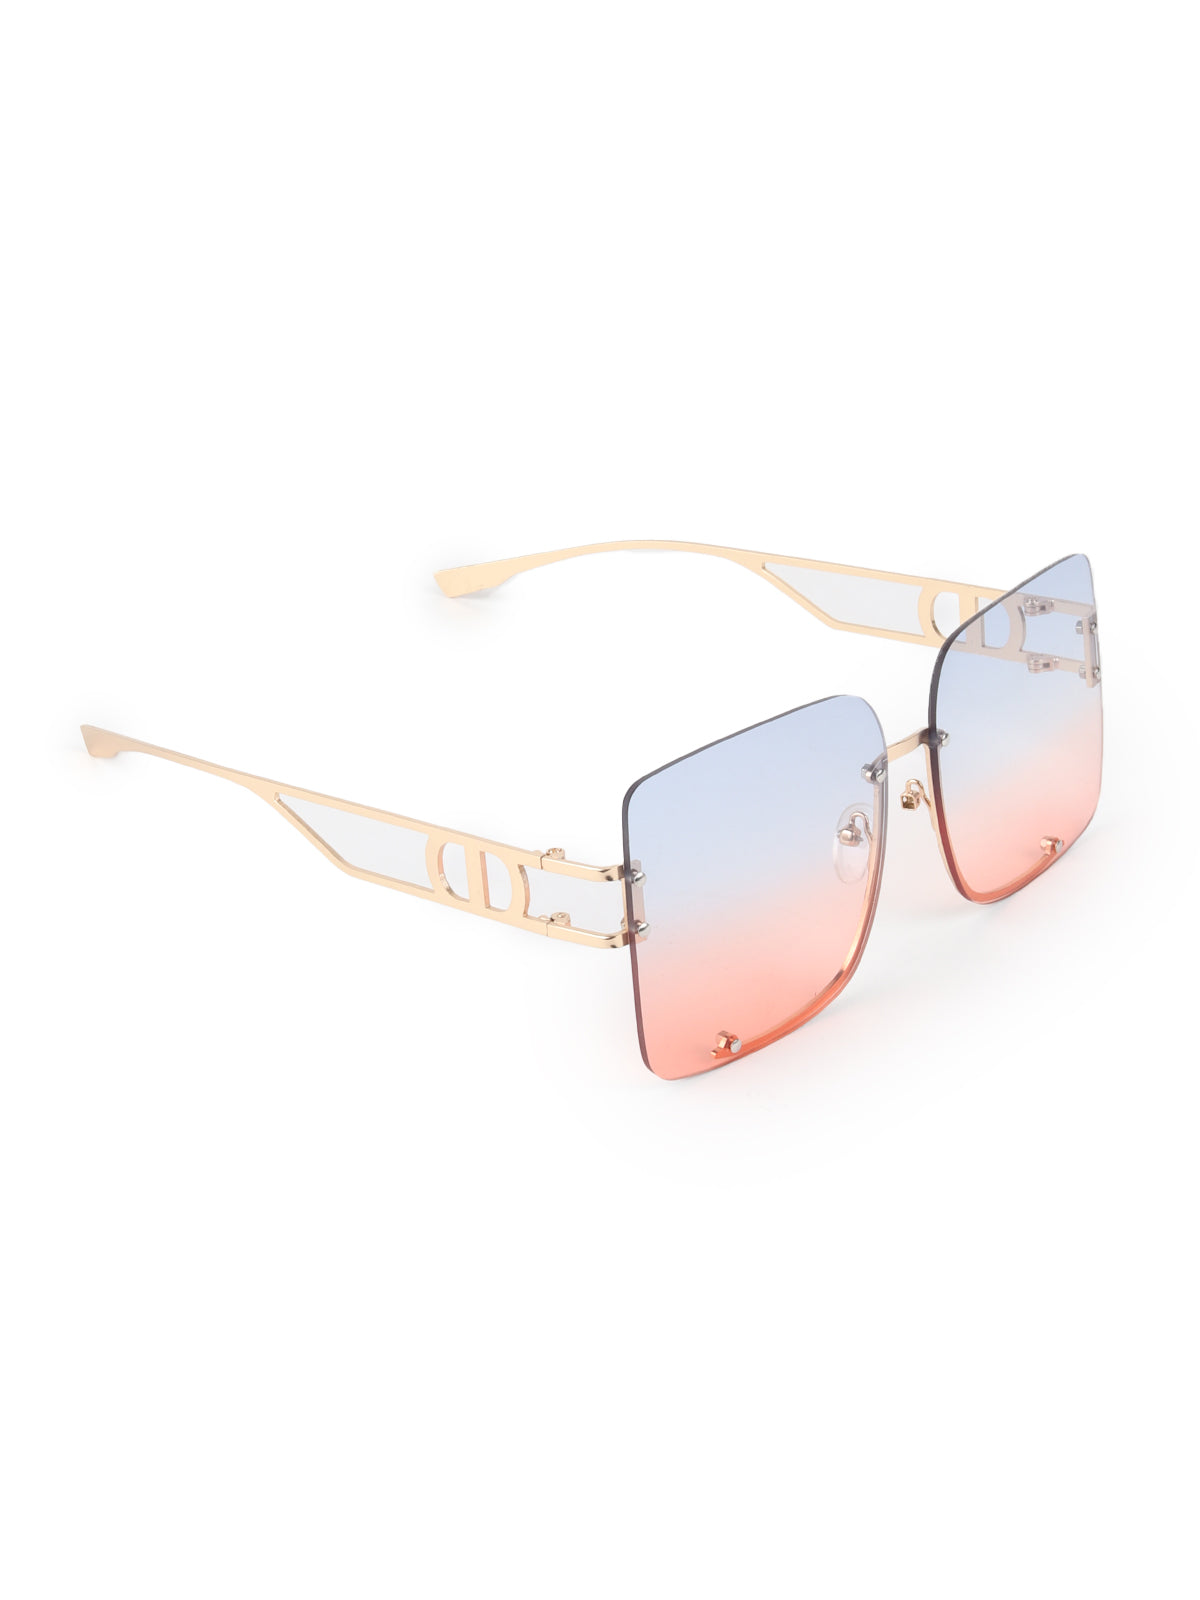 Odette Blue and Peach Oversized Square Sunglasses for Women